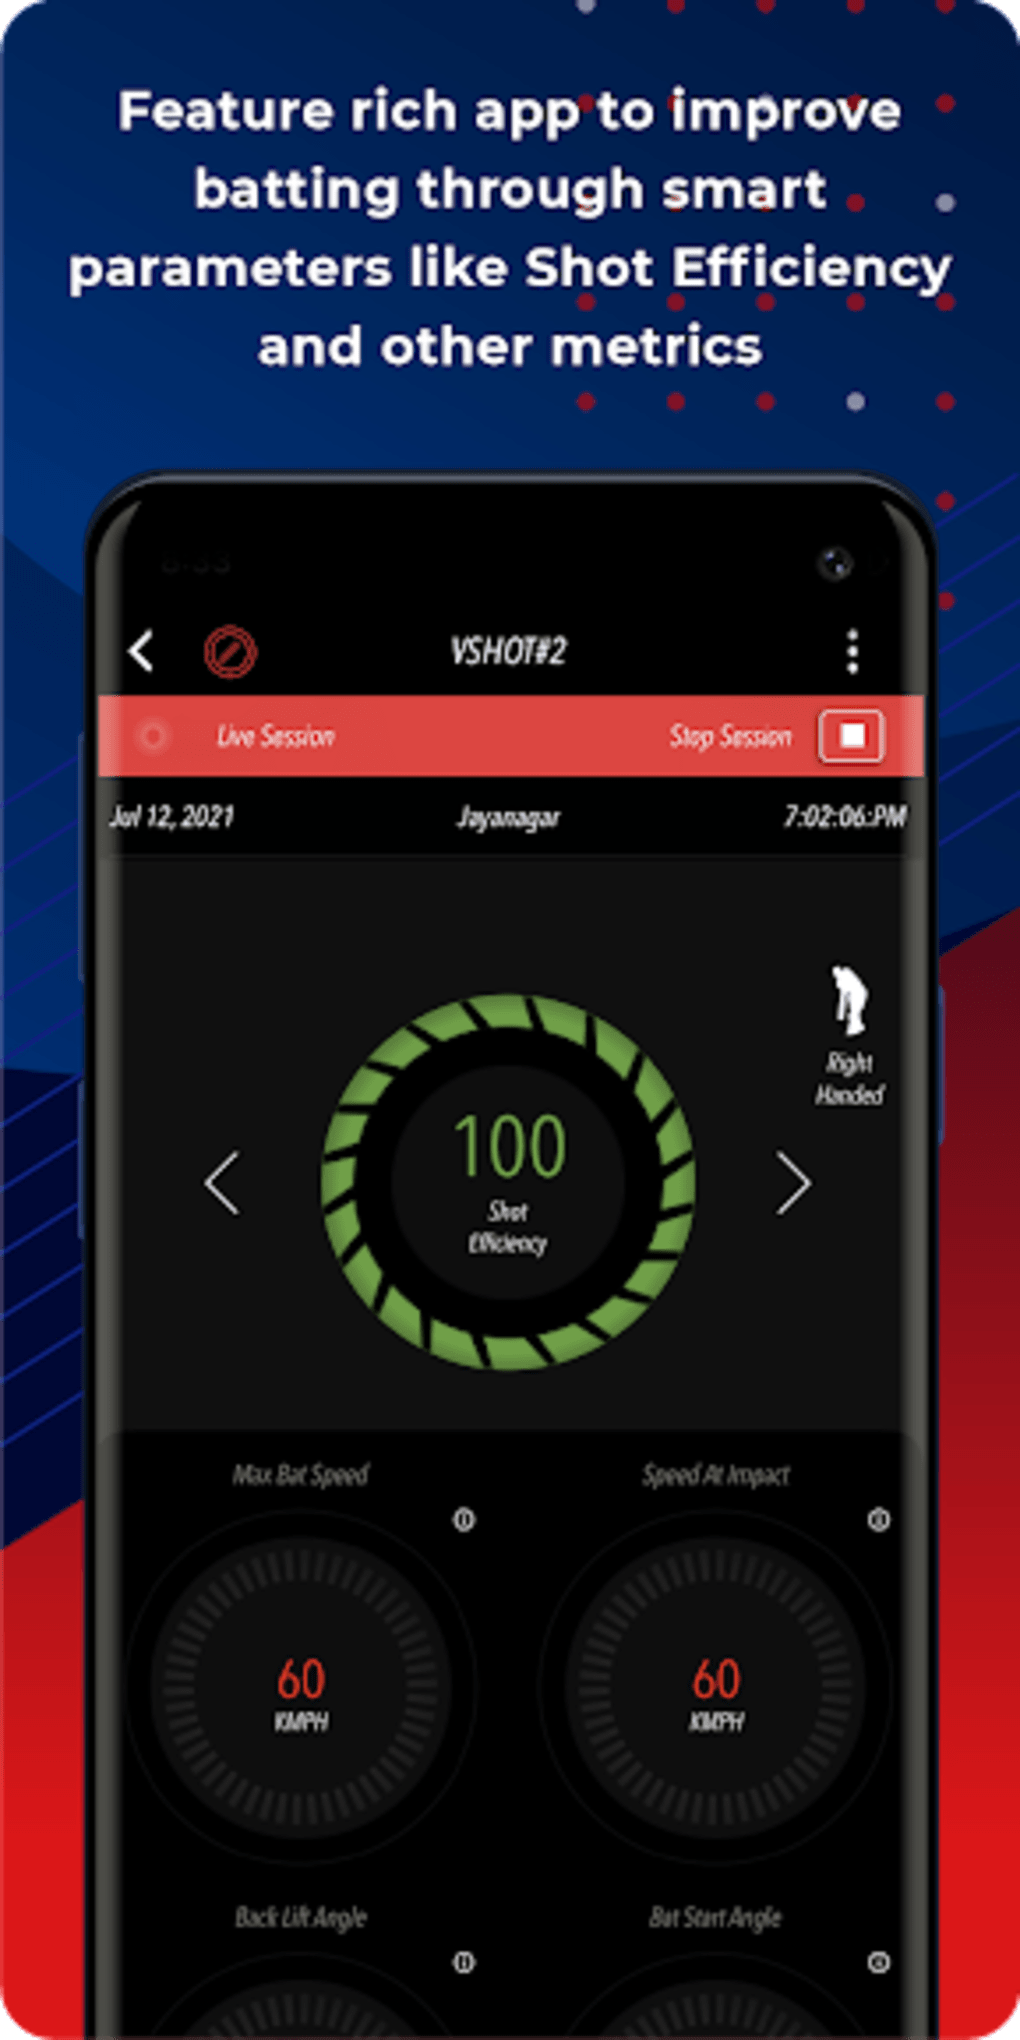 ipl cricket live app free download